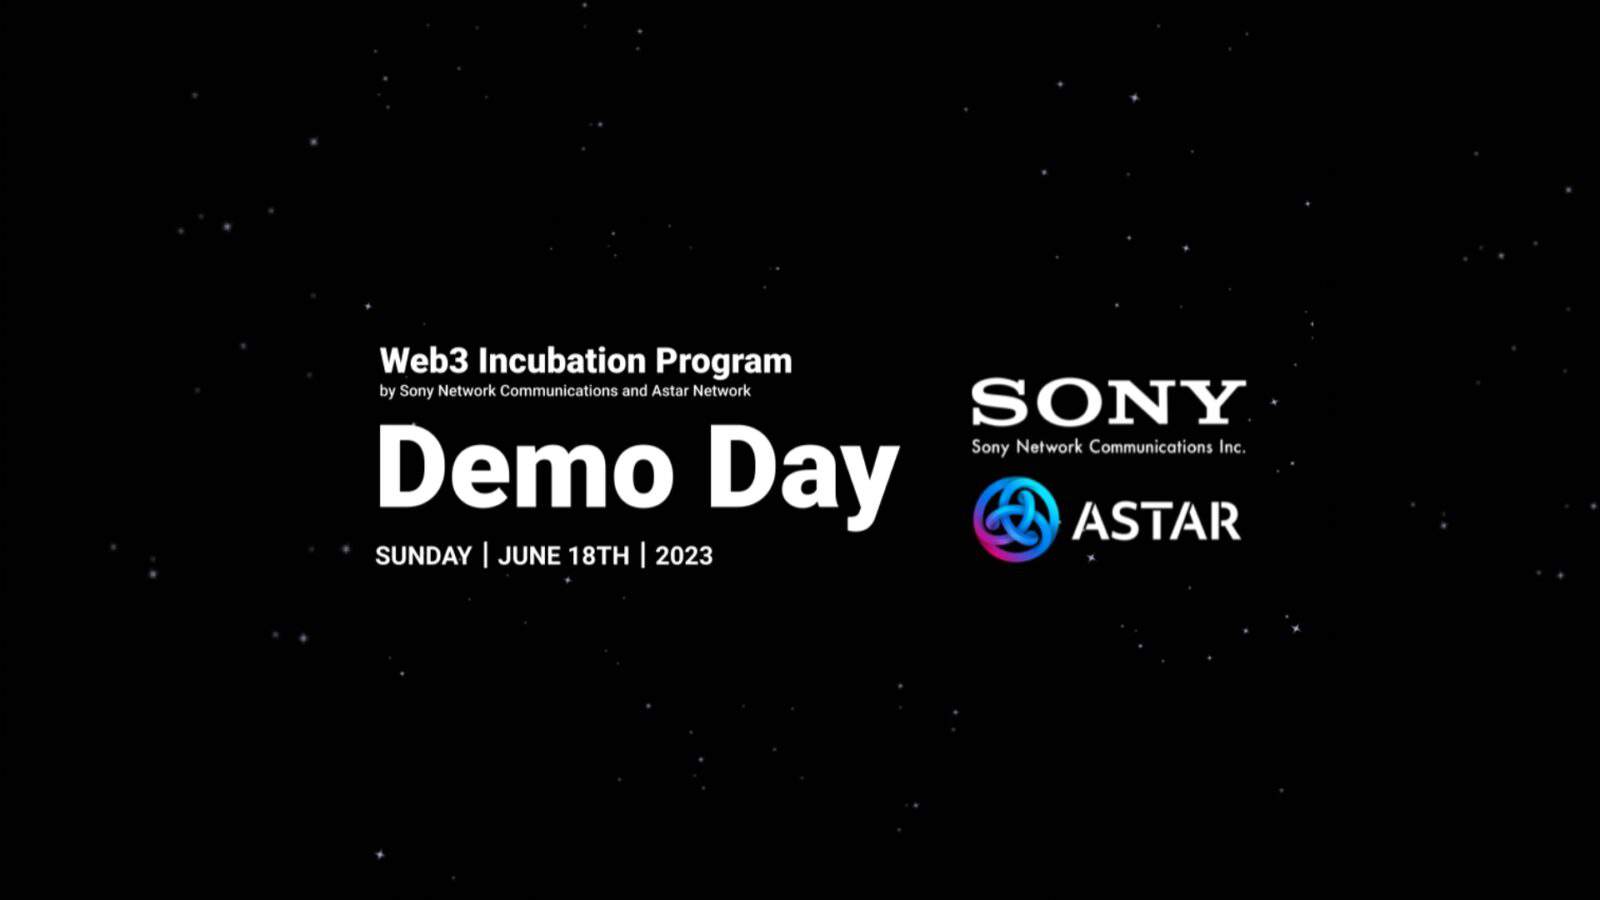 Sony Announces Groundbreaking Web3 Incubation Program Demo Day